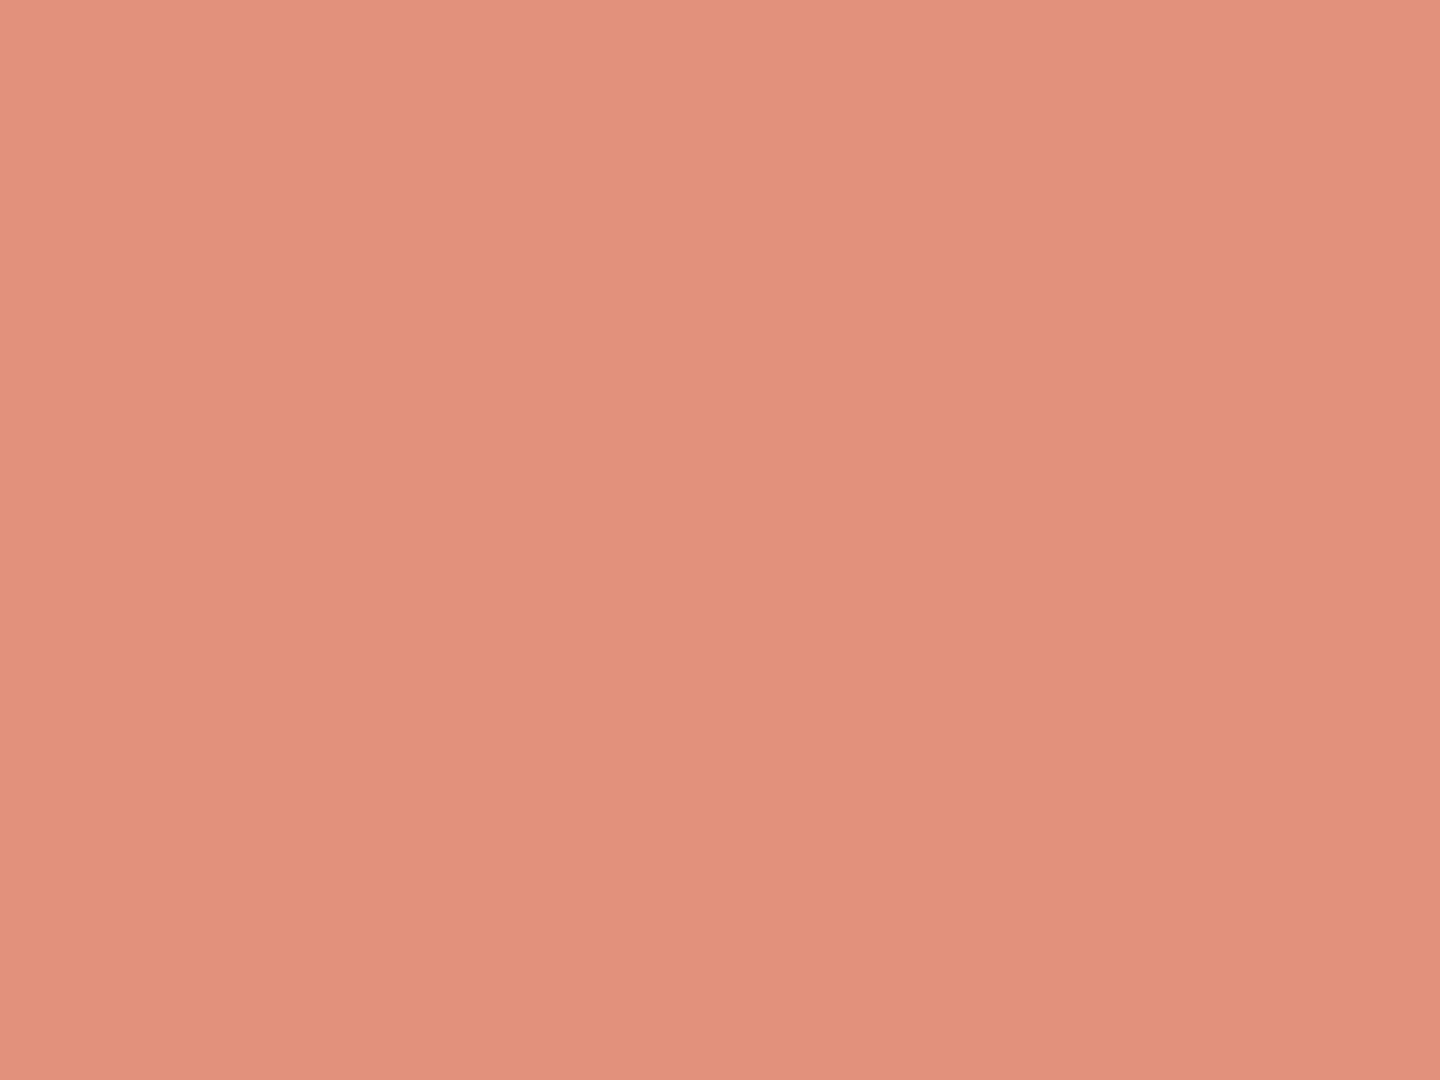 Laken Lind - Pink Terracotta